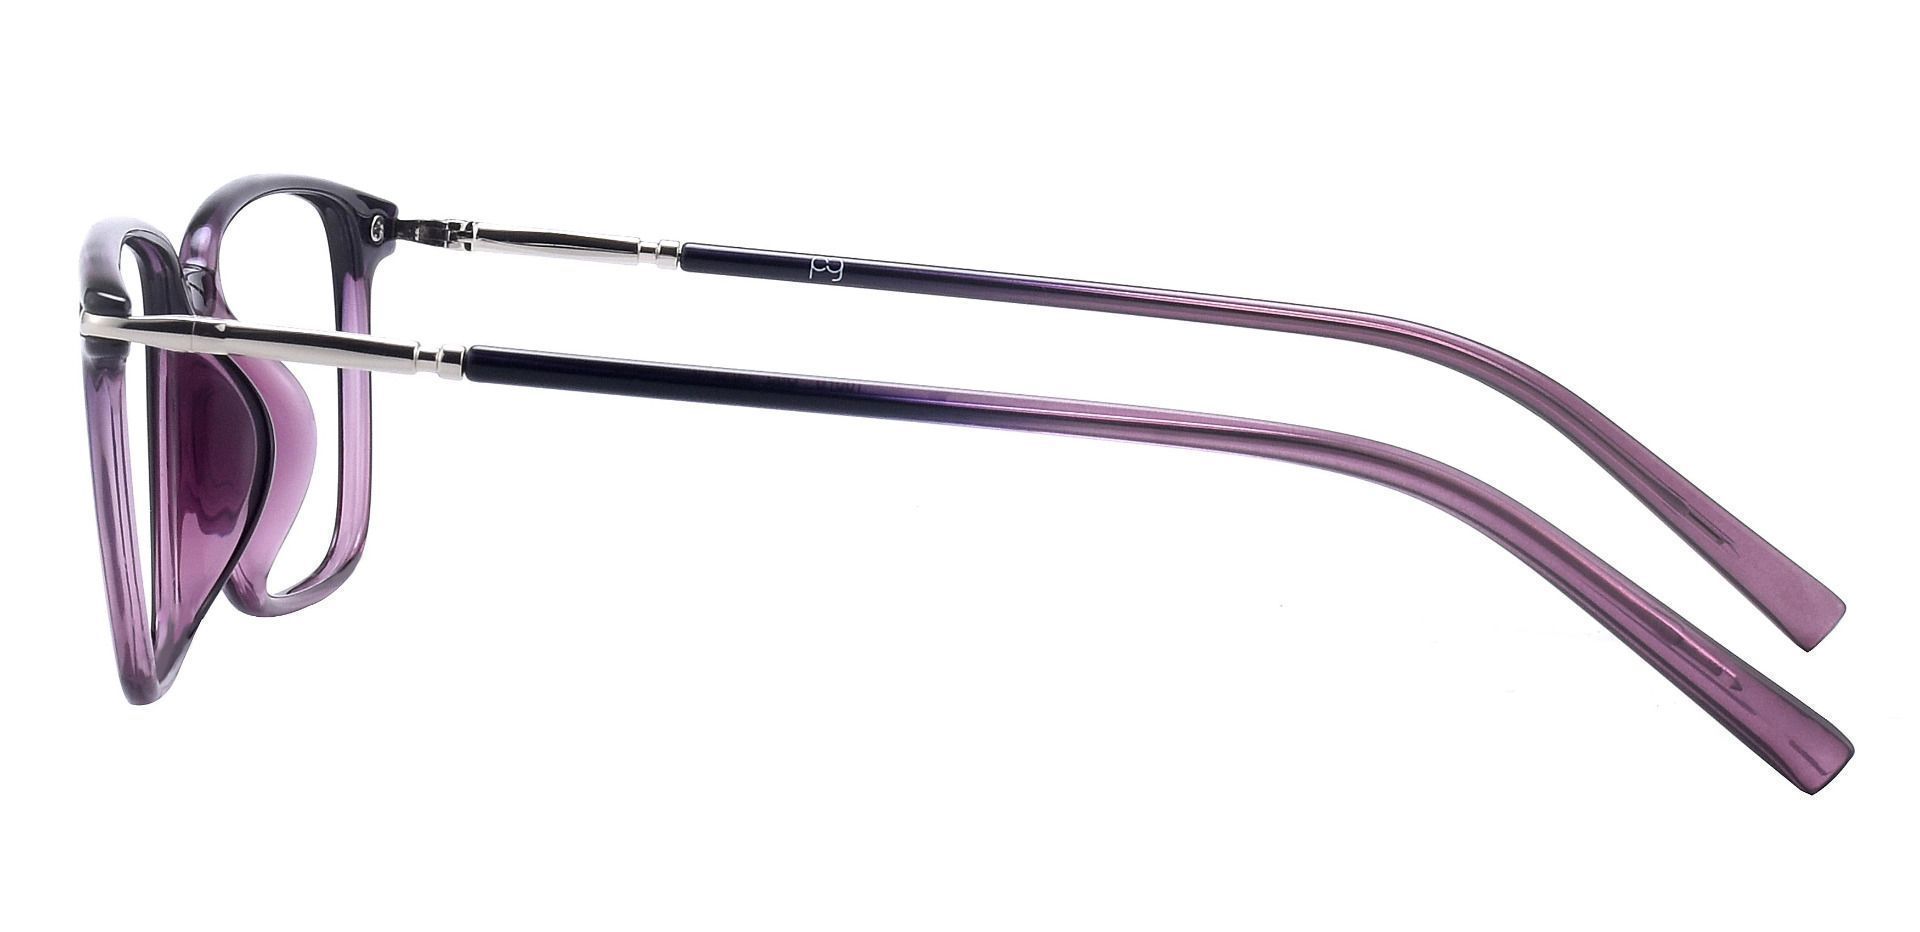 Surrey Rectangle Lined Bifocal Glasses - Purple